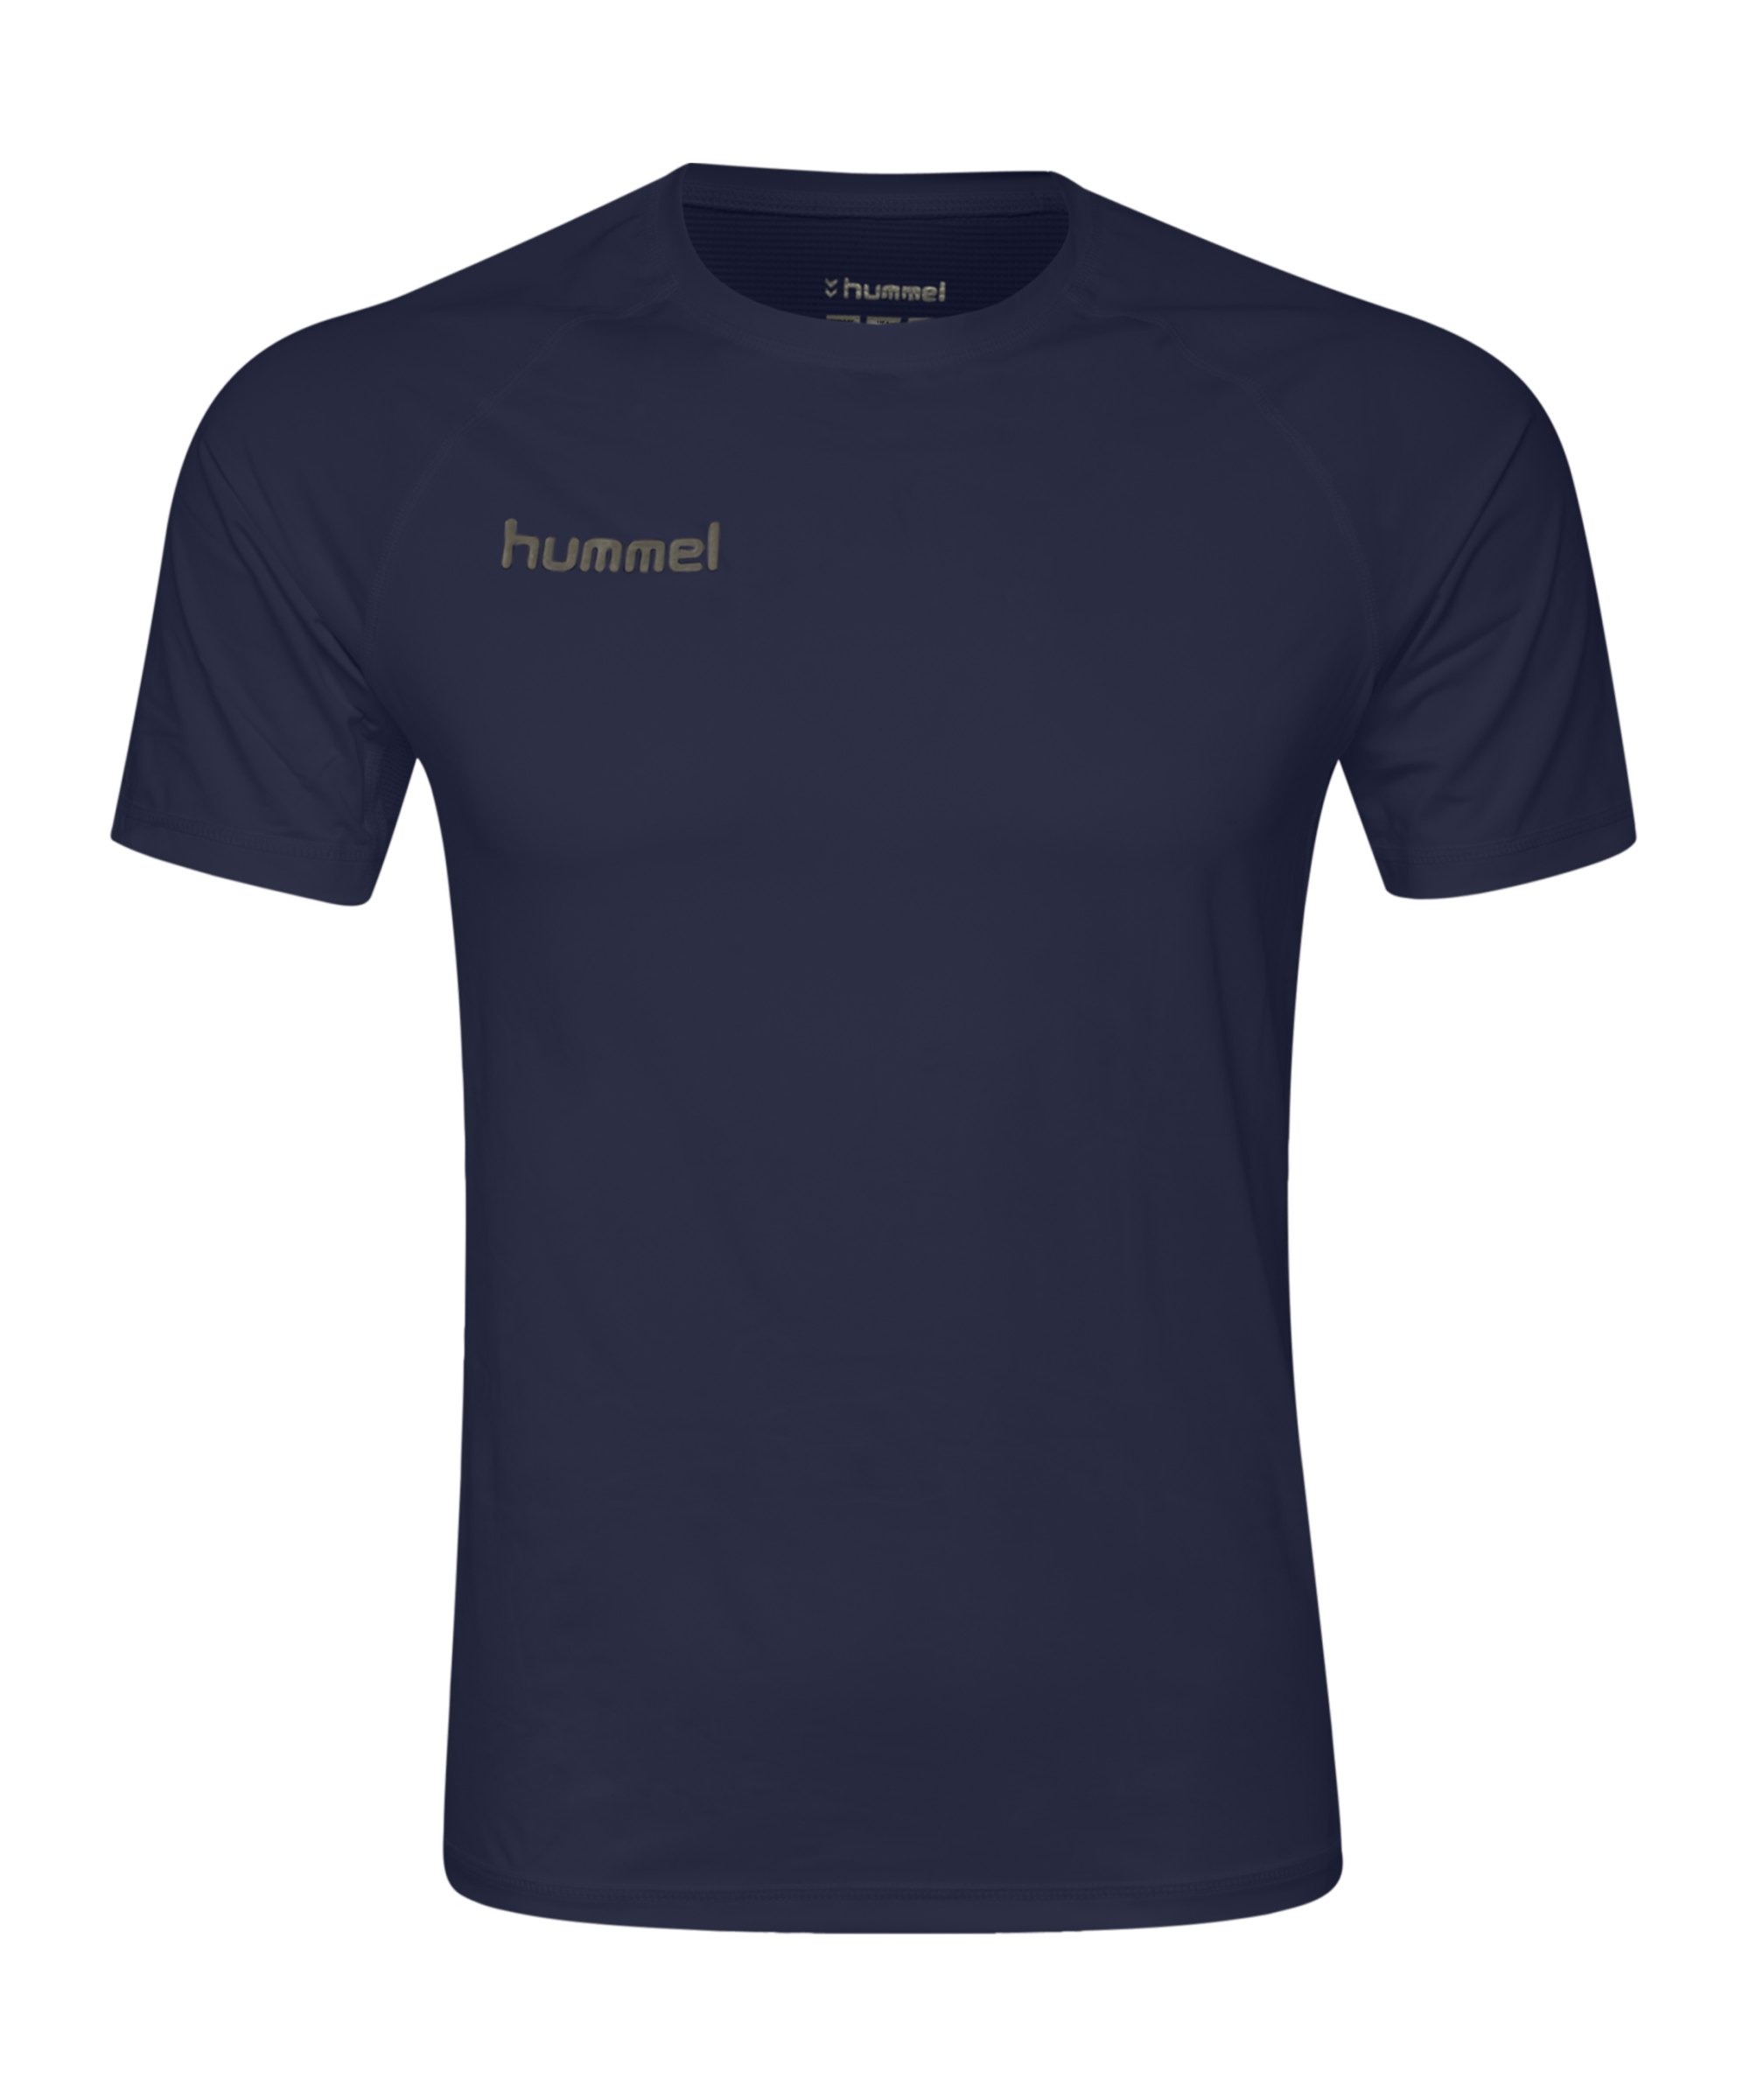 Hummel First Performance T-Shirt Blau F7026 - Blau